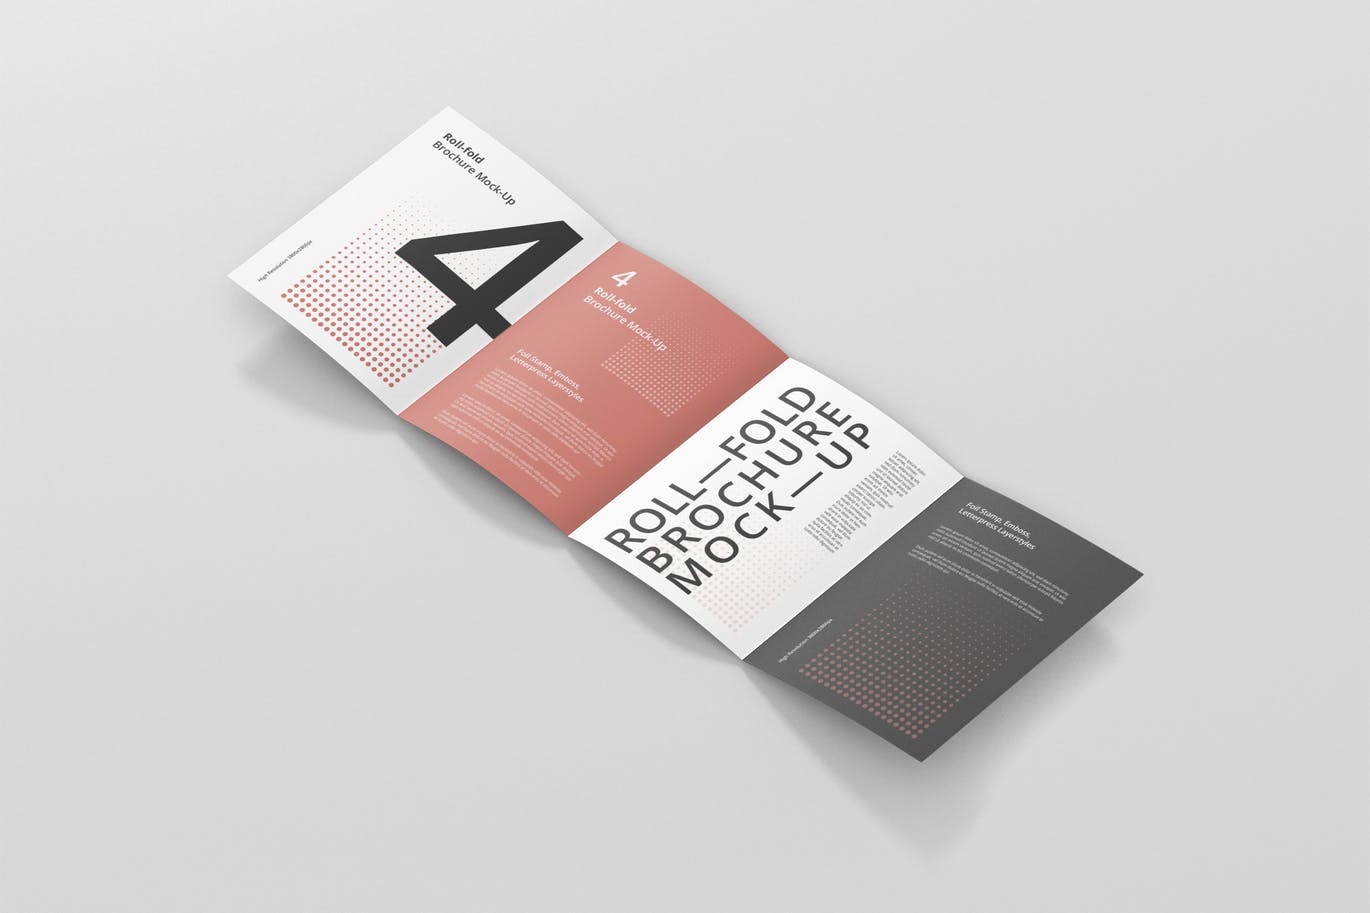 A roll-fold brochure mockup template